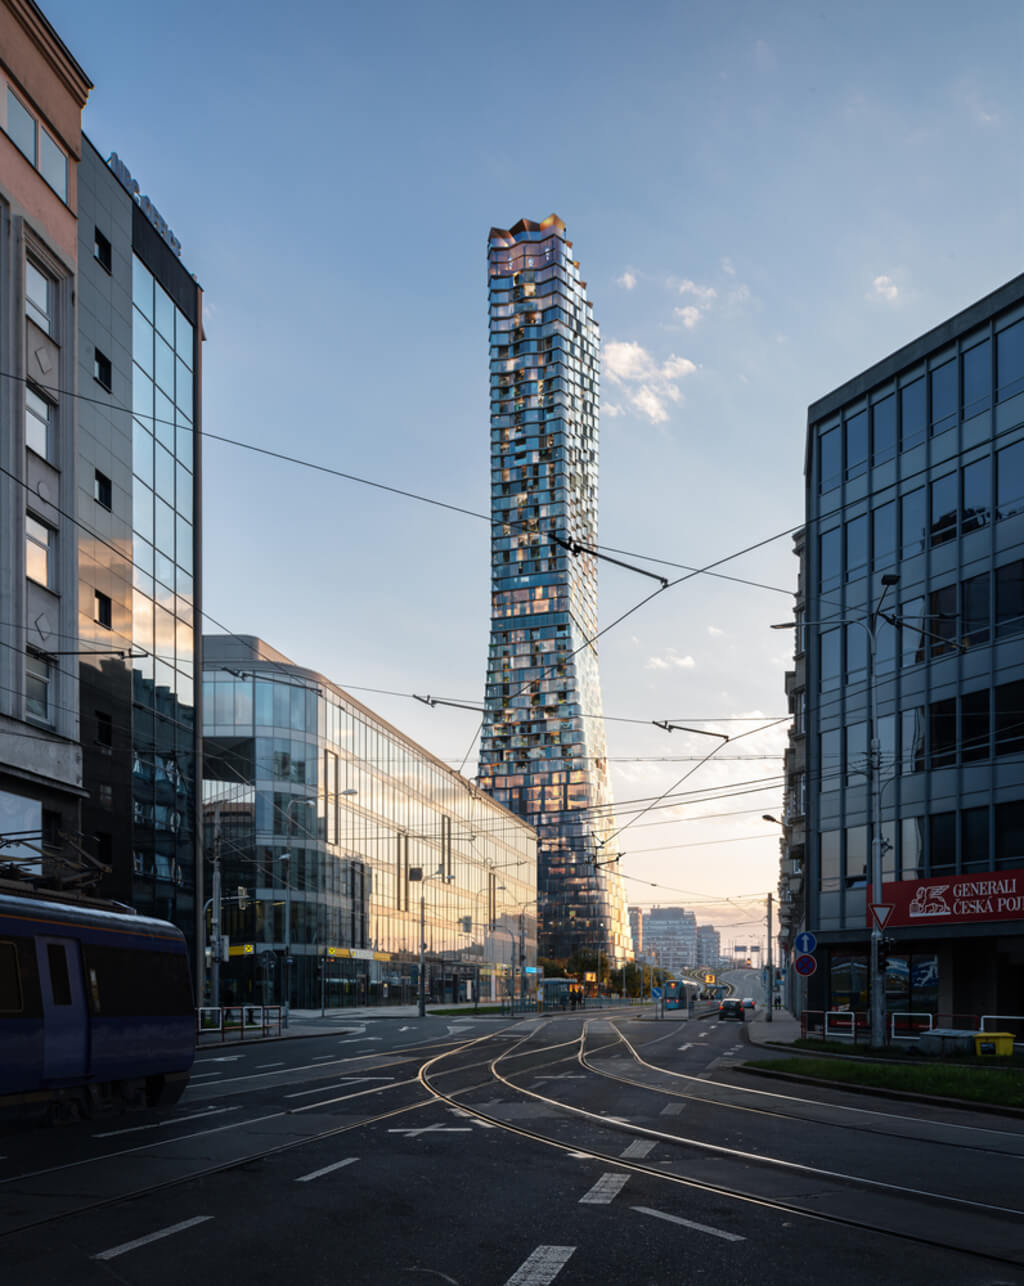 Czech Republic's tallest skyscraper middle of a street